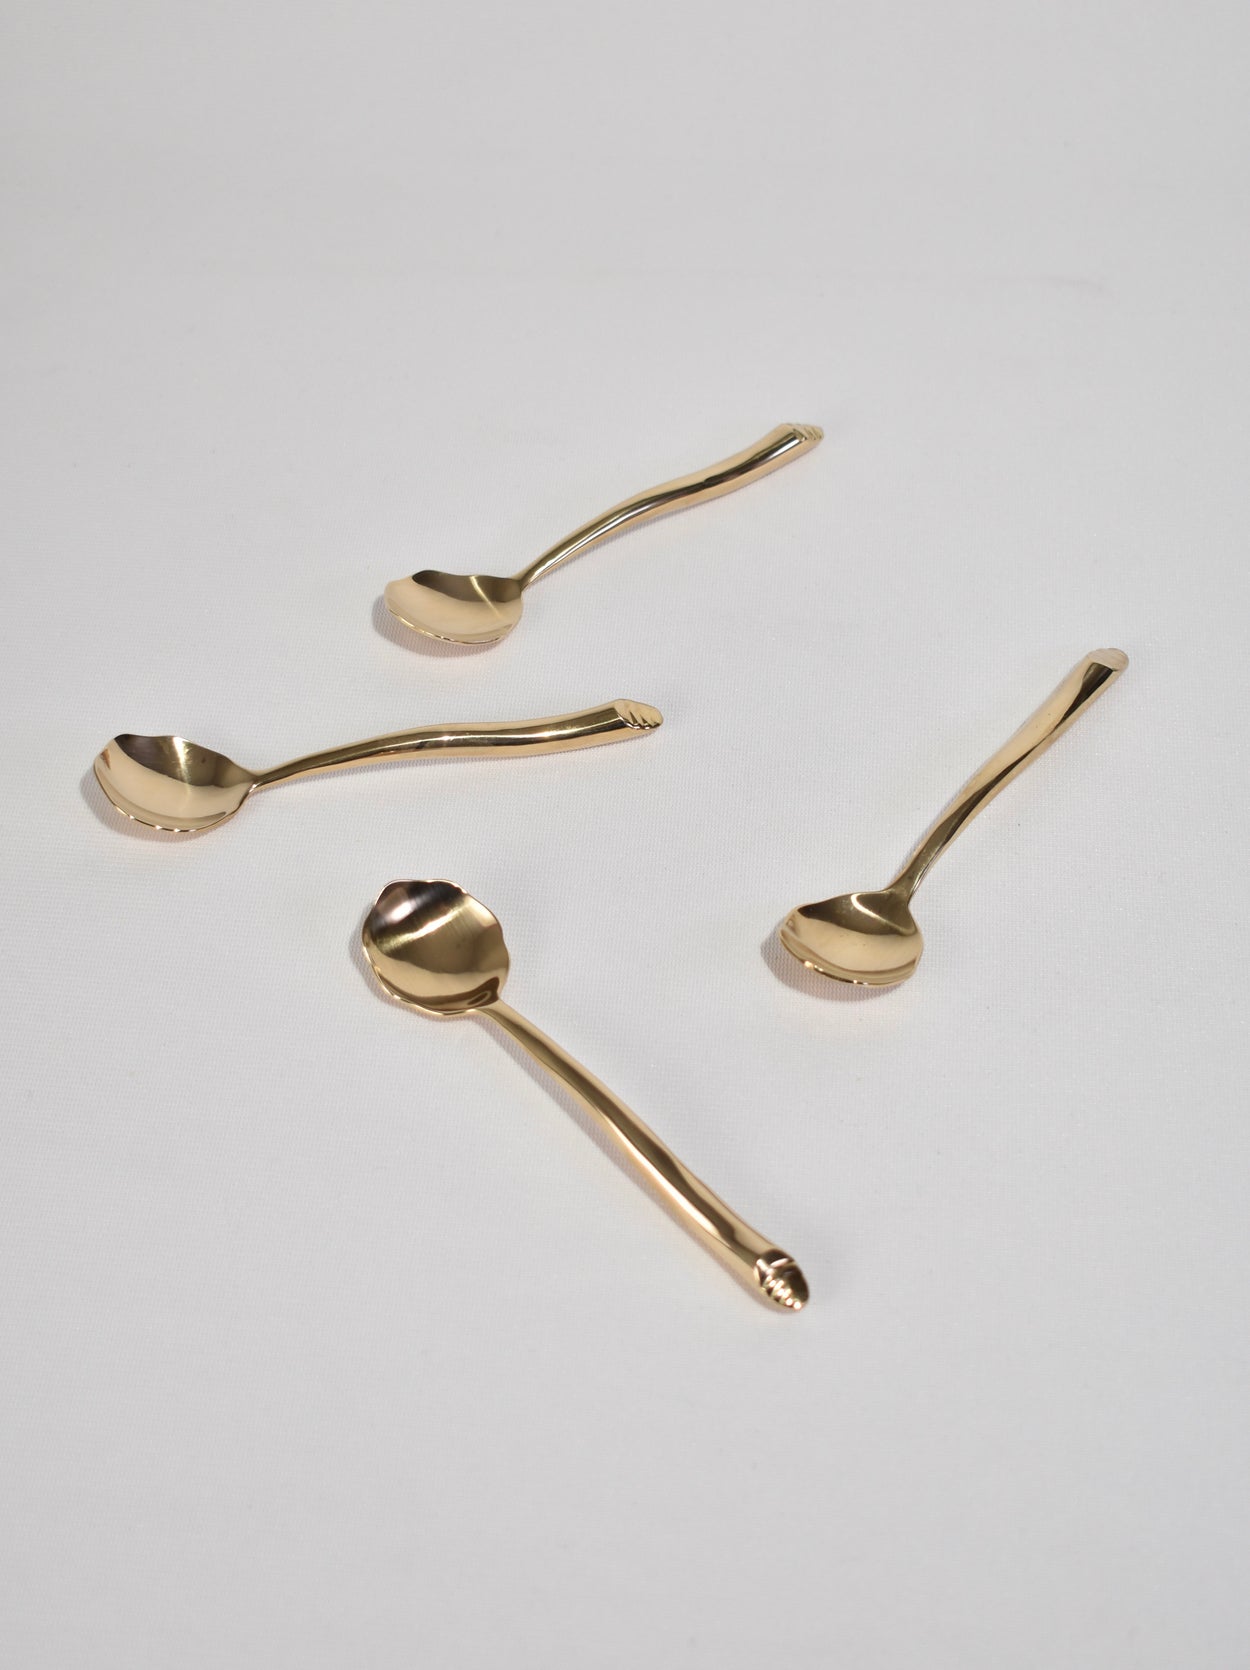 Bronze Demitasse Spoon Set